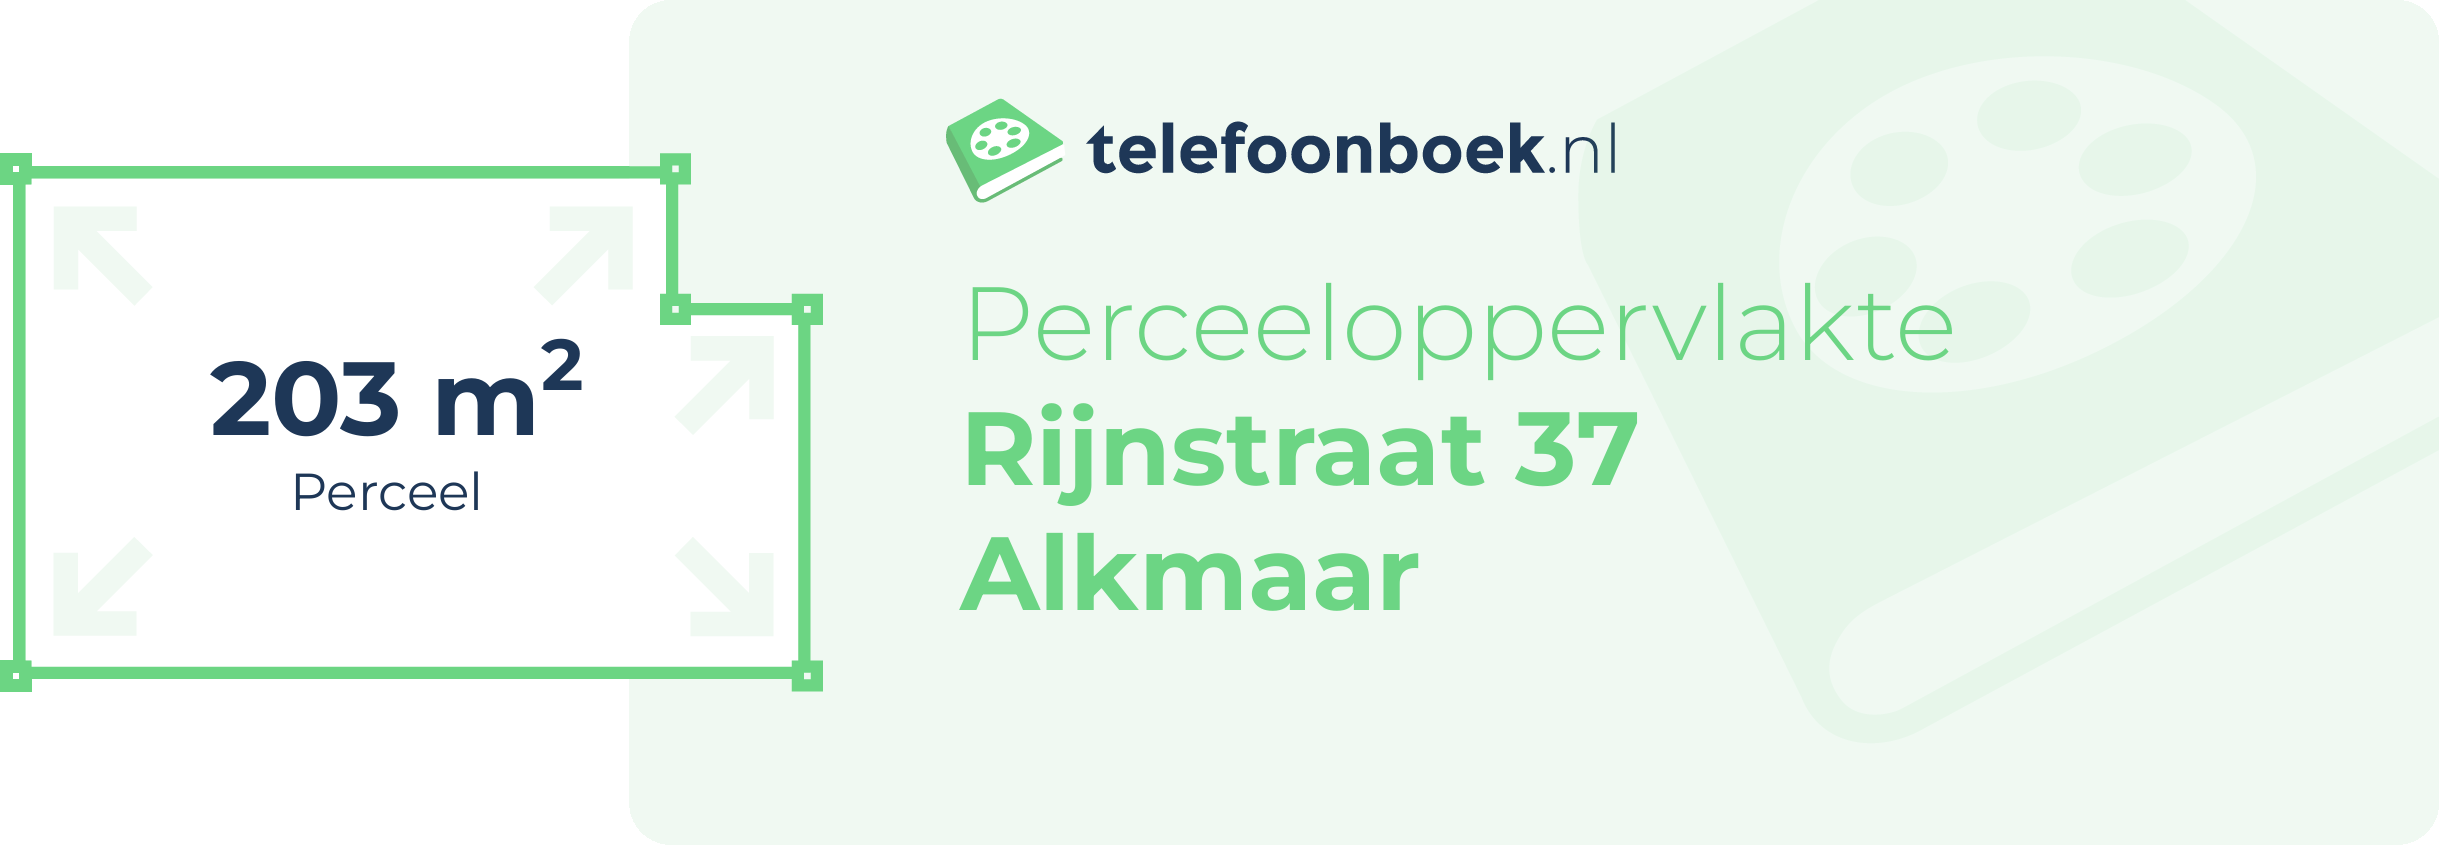 Perceeloppervlakte Rijnstraat 37 Alkmaar